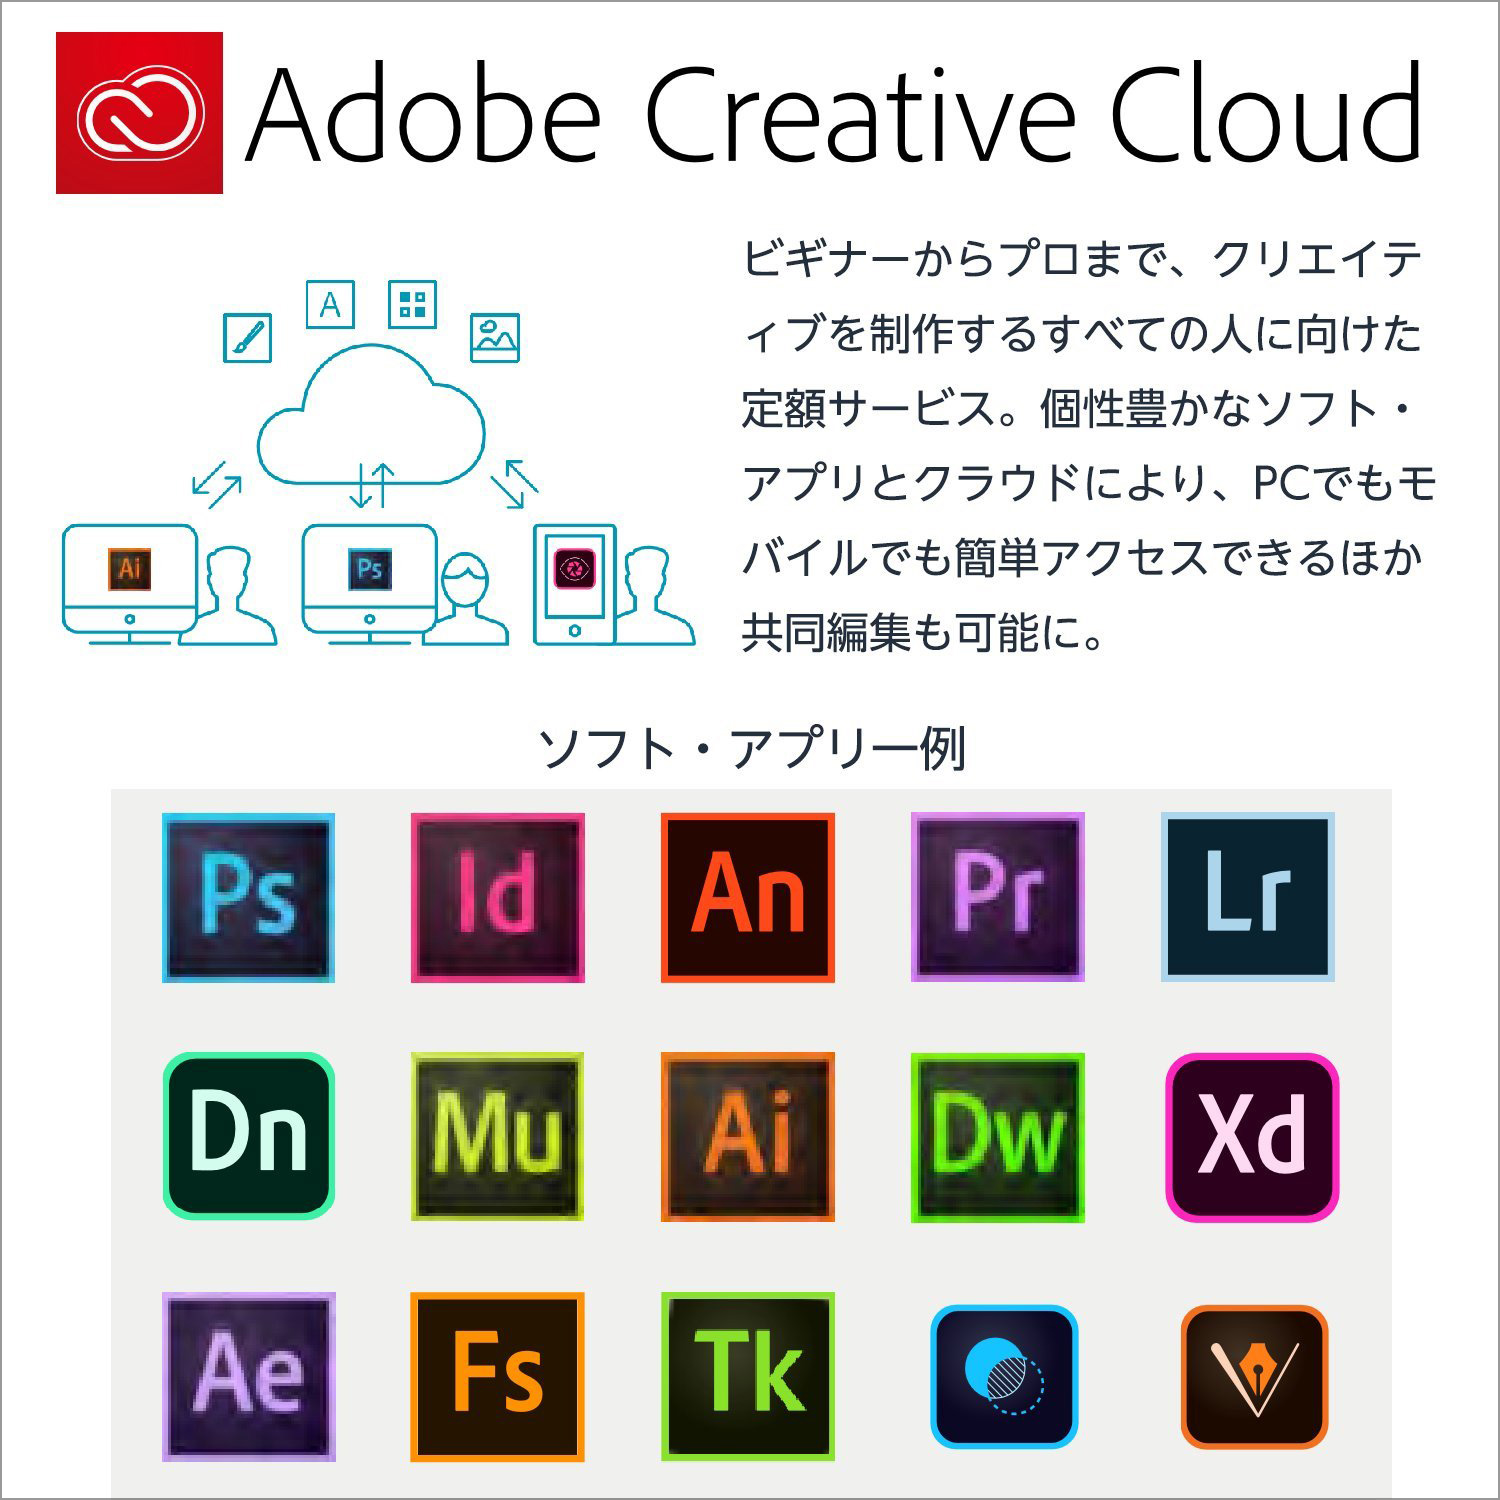 35 Off プライムデーで Adobe Creative Cloud コンプリート 12か月版 他が値下げ中 19年7月16日 エキサイトニュース